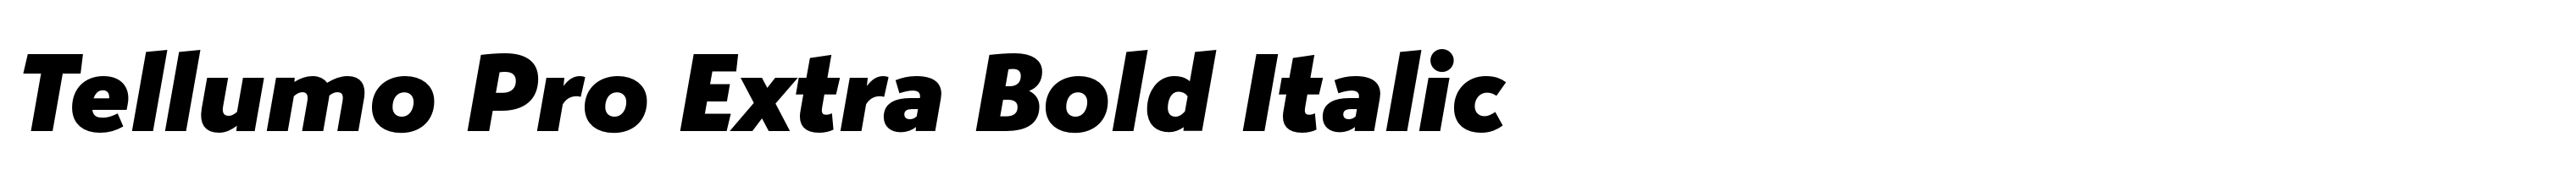 Tellumo Pro Extra Bold Italic